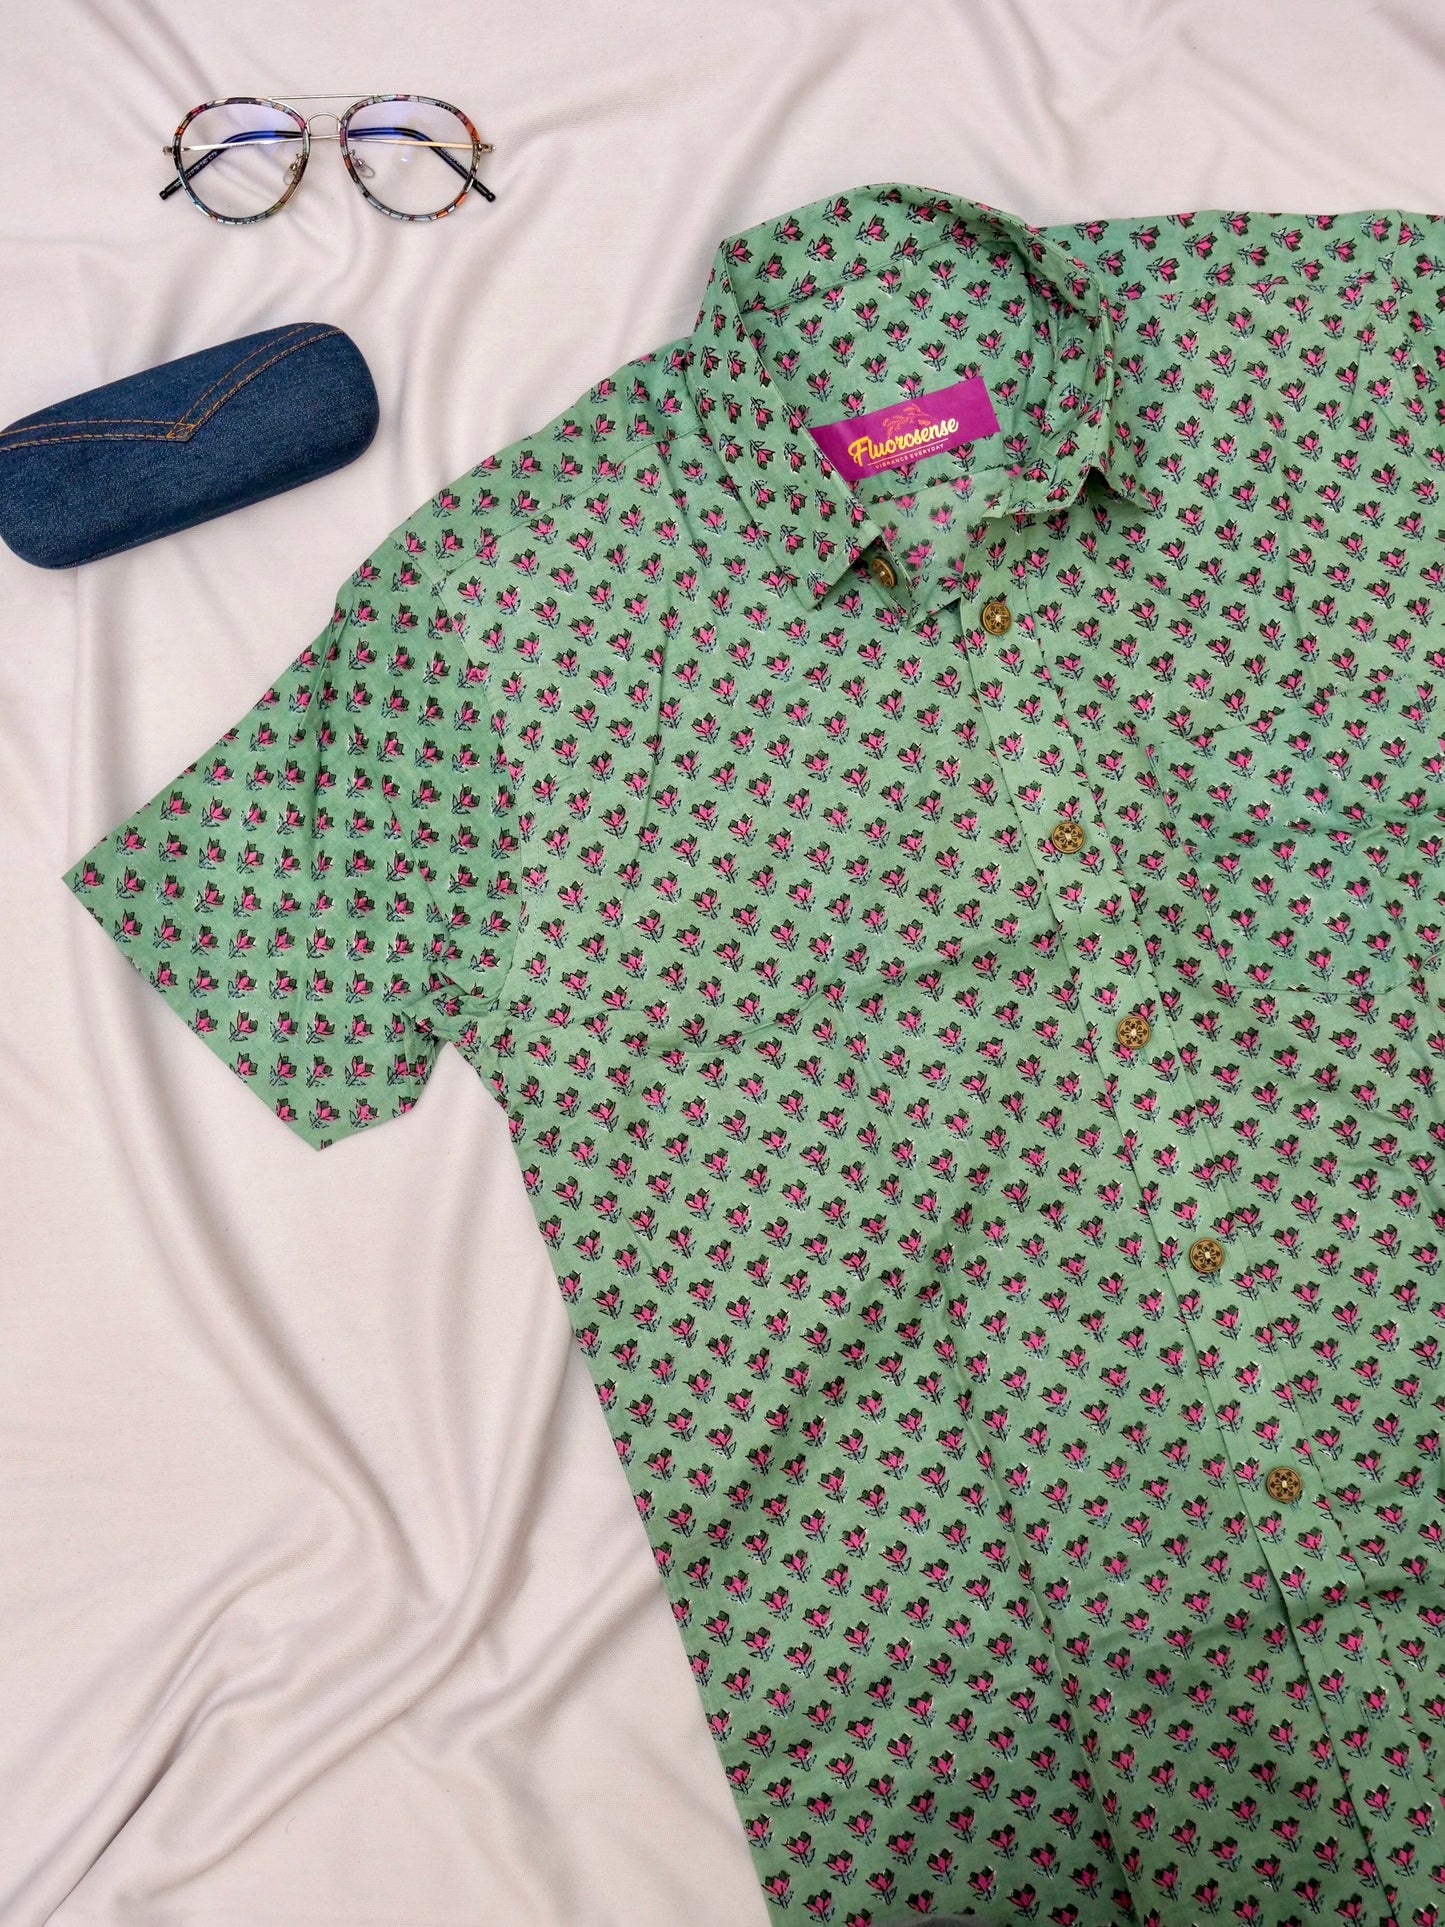 Men's Casual Shirt | 100% Cotton | Half-Sleeves | Motifs Print | Persian Green & Pink